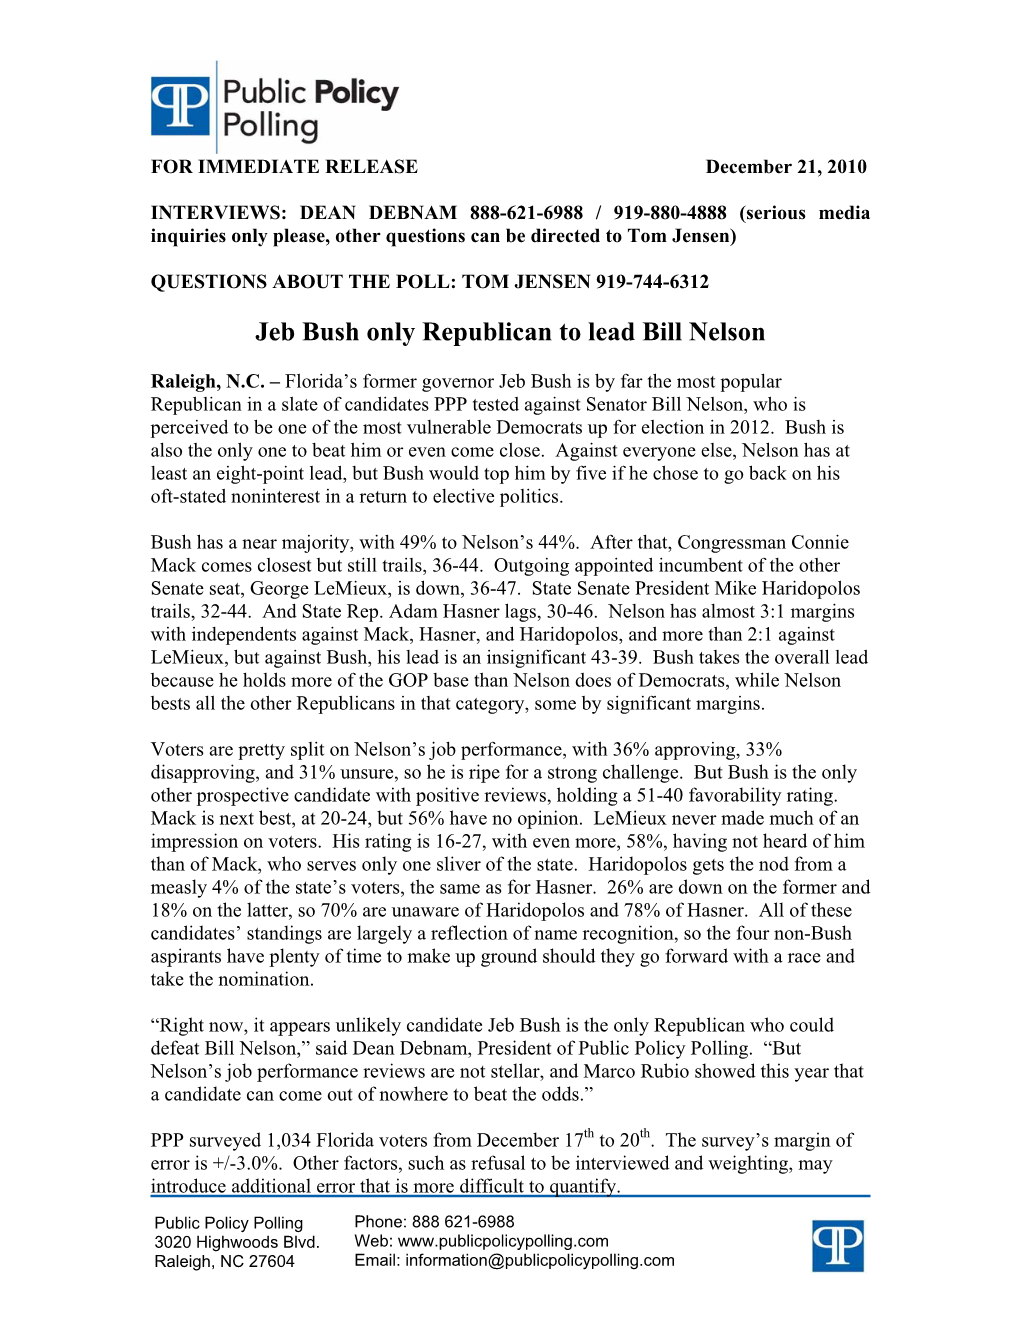 Jeb Bush Only Republican to Lead Bill Nelson